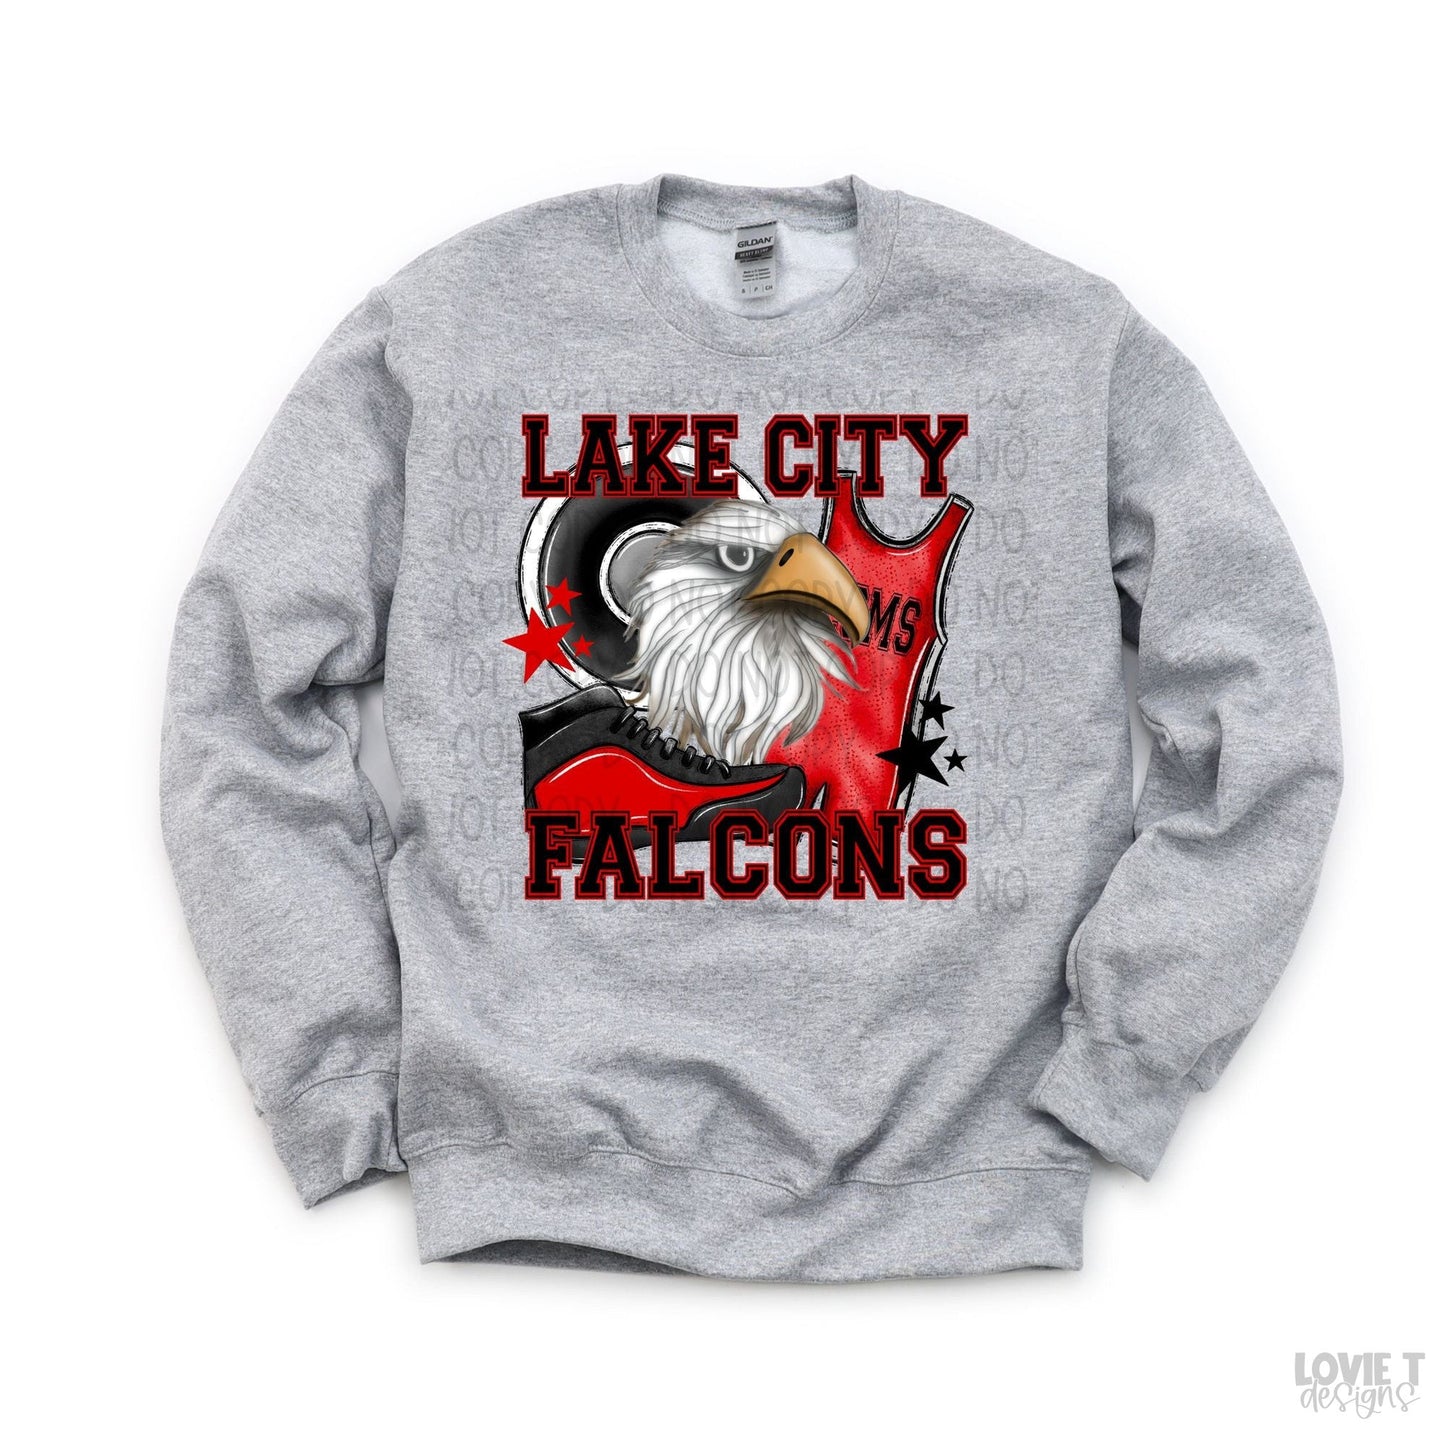 Lake City Falcons Wrestling